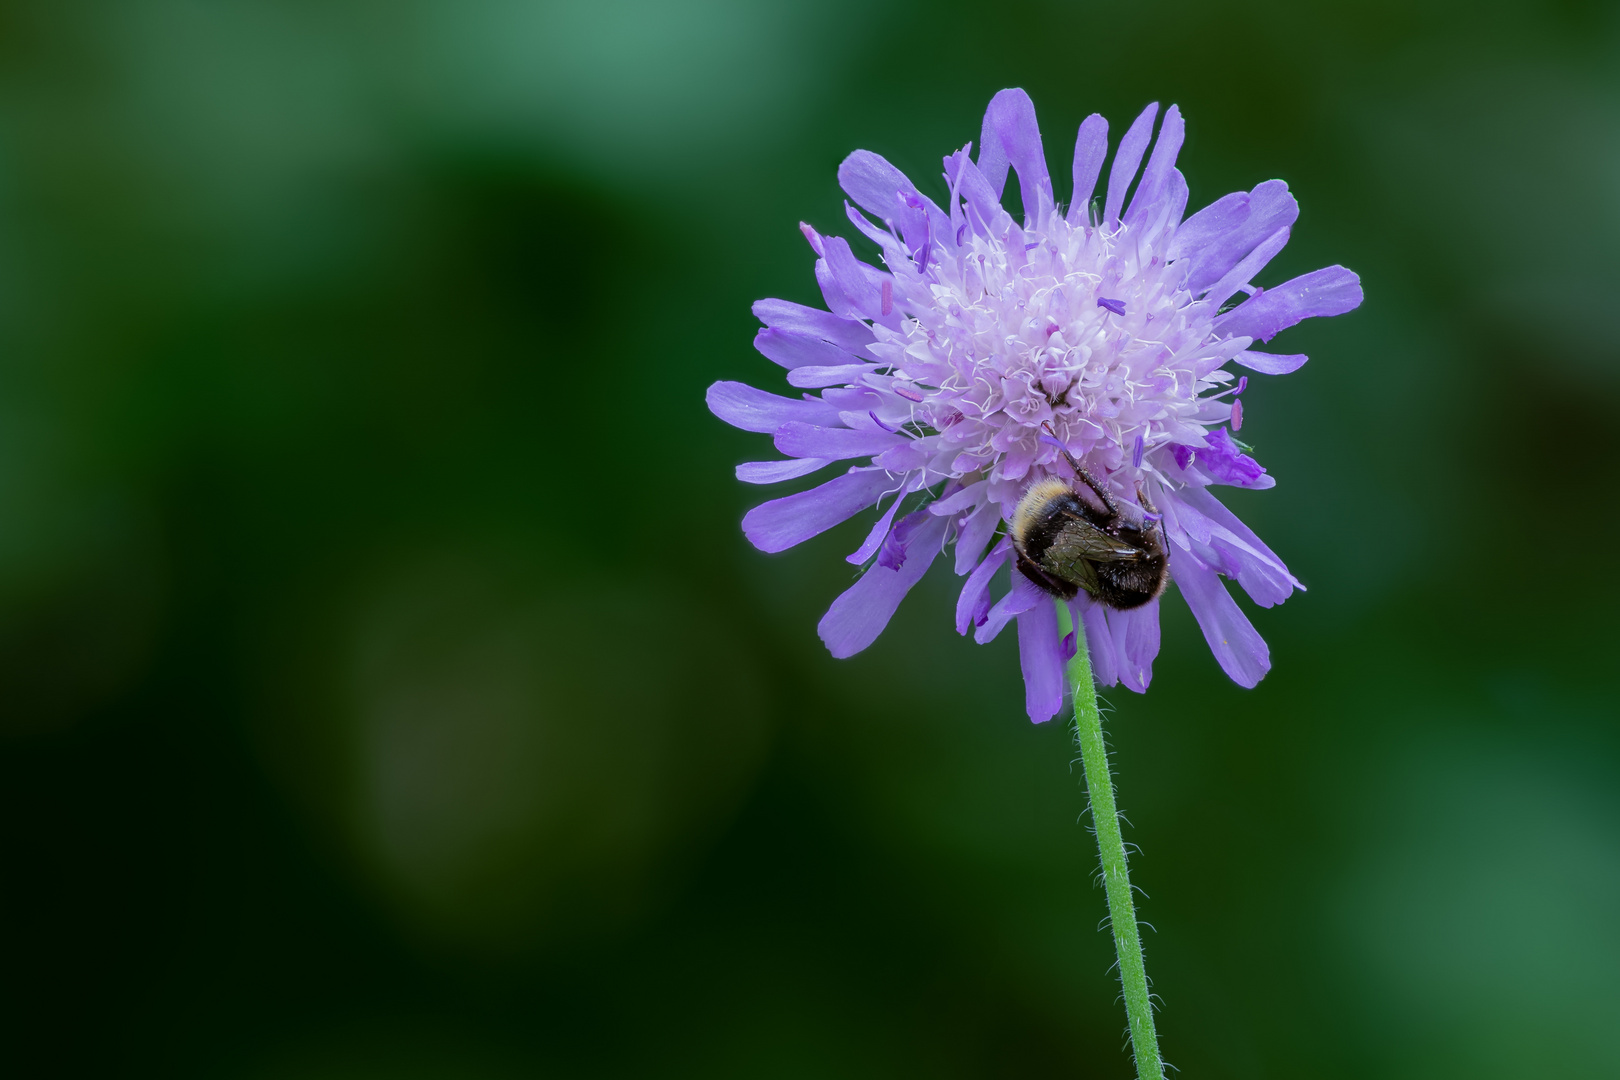 Biene erholt sich an Acker-Witwenblume